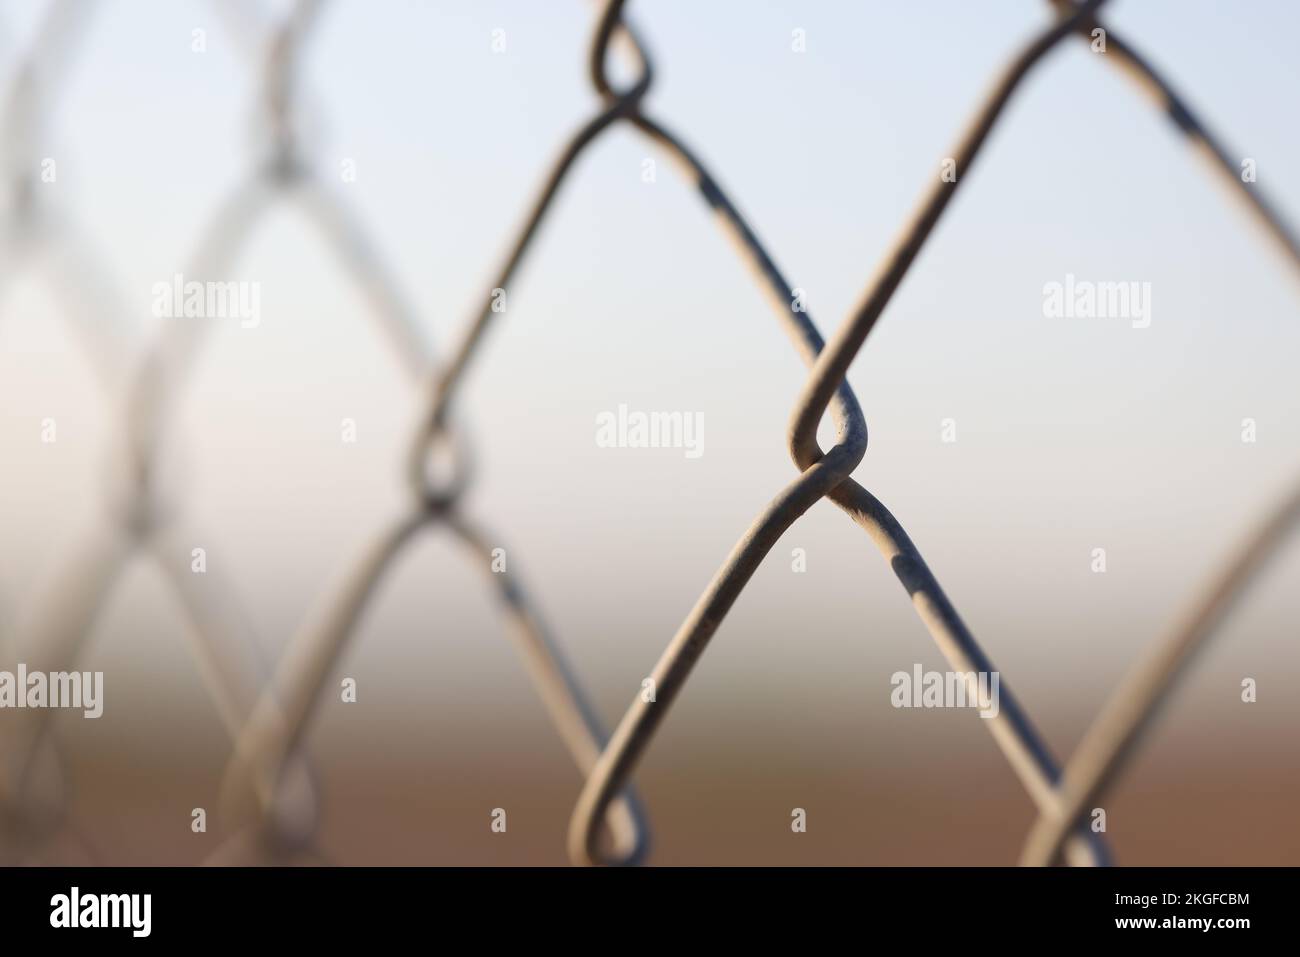 Metal chain links wire-mesh rabitz on blurred background Stock Photo